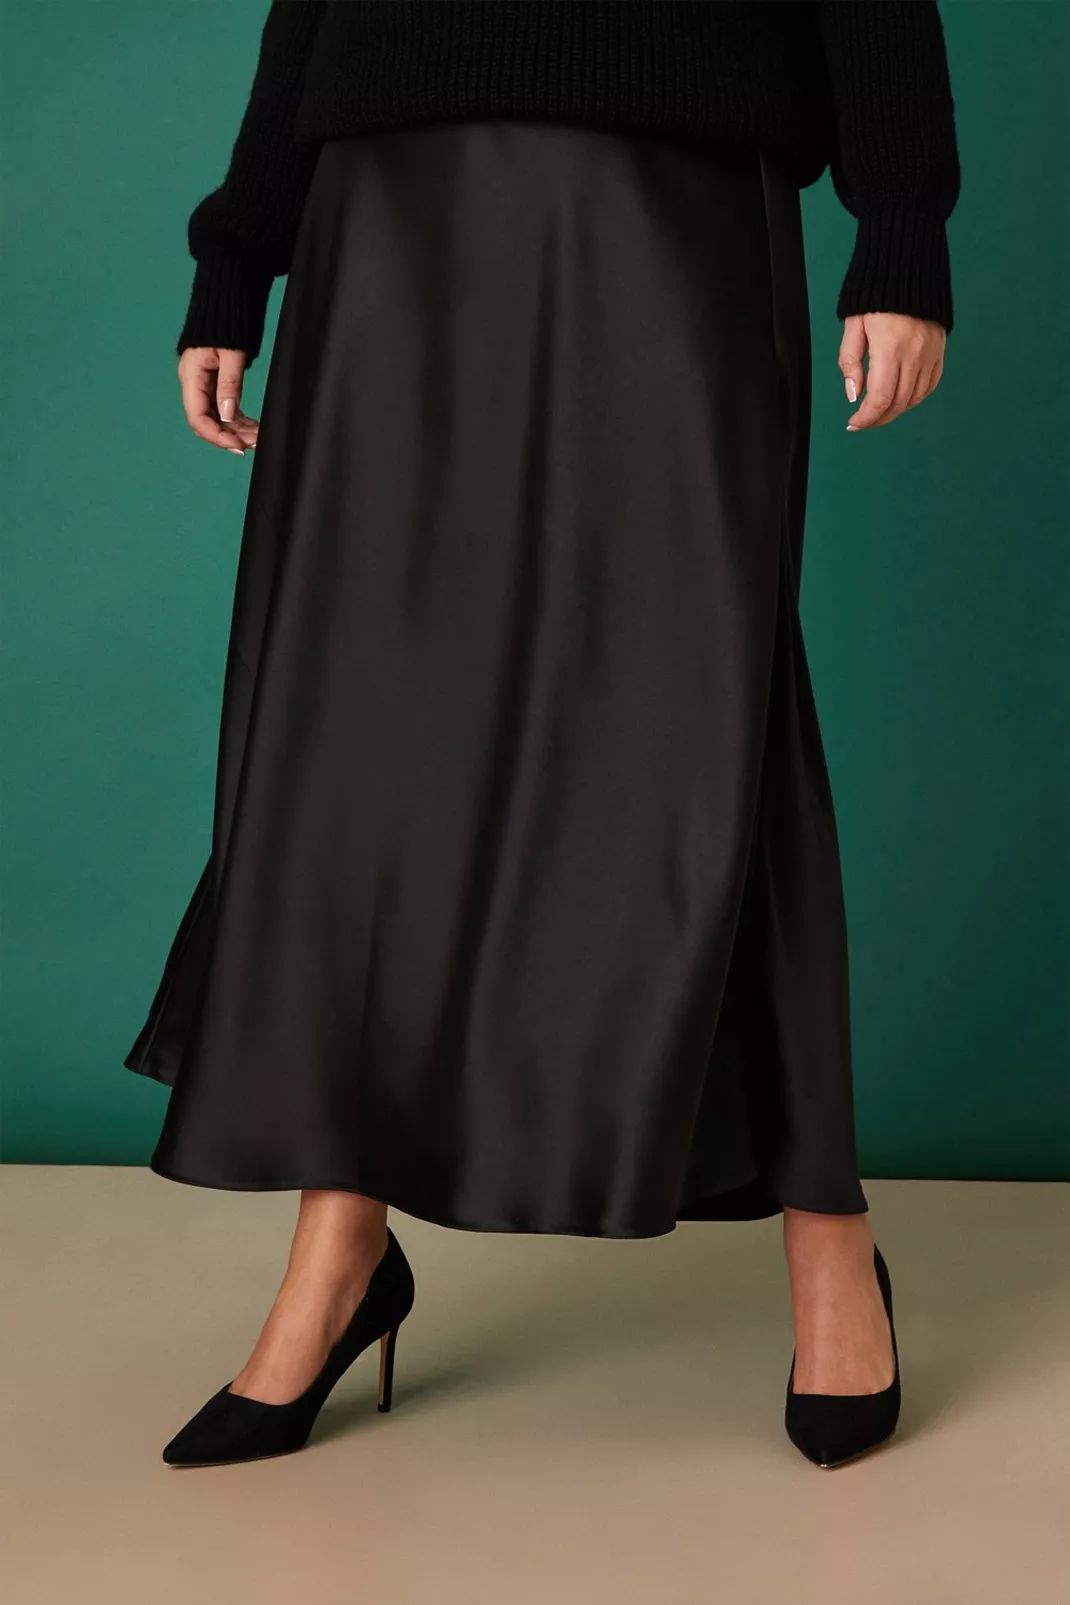 Buy Curve Satin Bias Cut Midi Skirt for GBP 19.00 | Dorothy Perkins UK | Dorothy Perkins (UK)